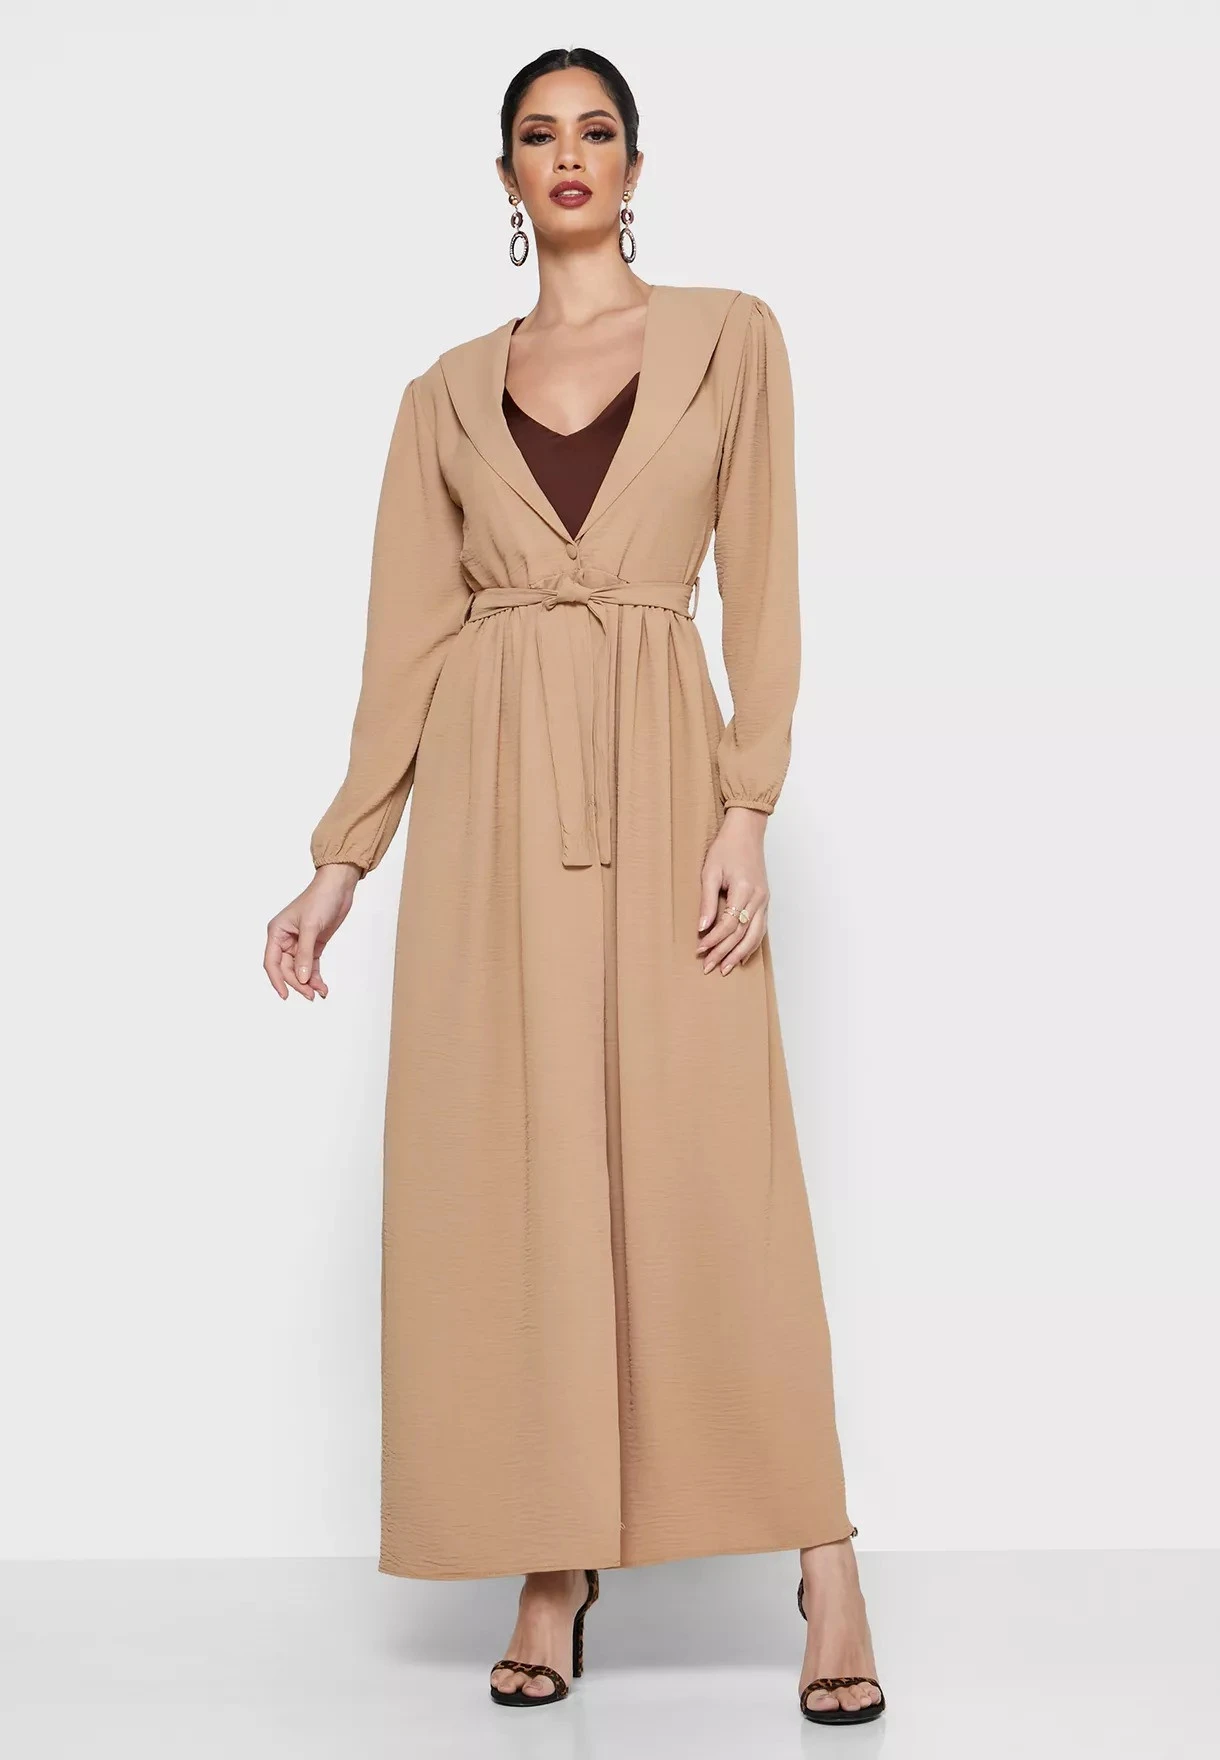 Oem Custom Islamic Dubai High Fashion Plus Size Front Open V Neck Long Sleeves Single Button Abaya Kimino Kaftans